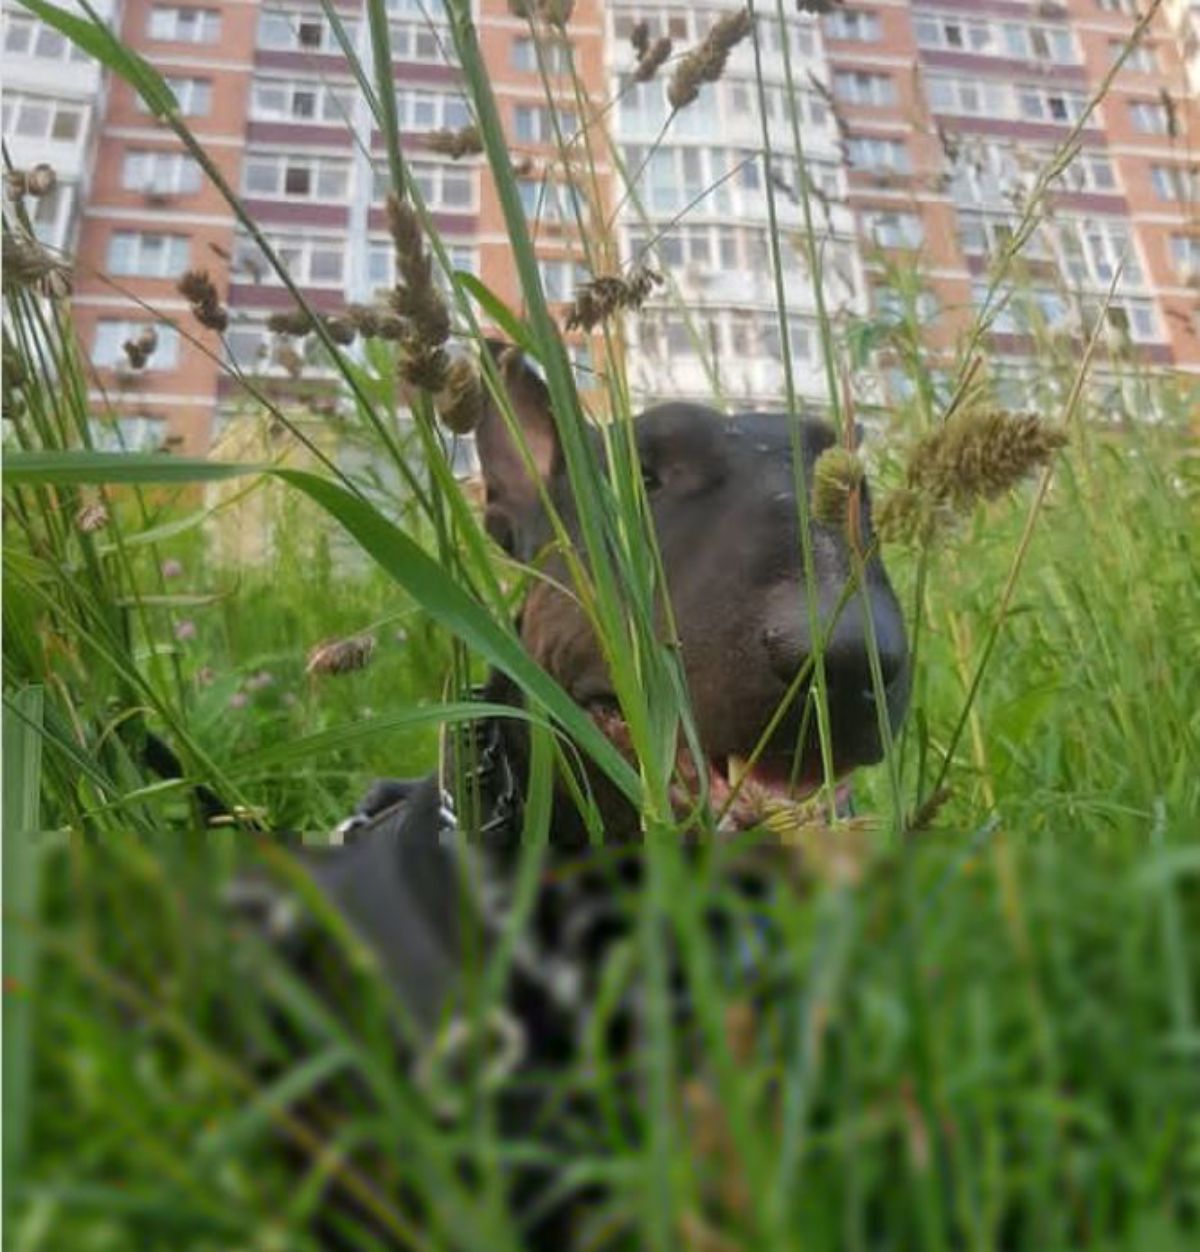 Black Bull Terrier behind the bushy green grass